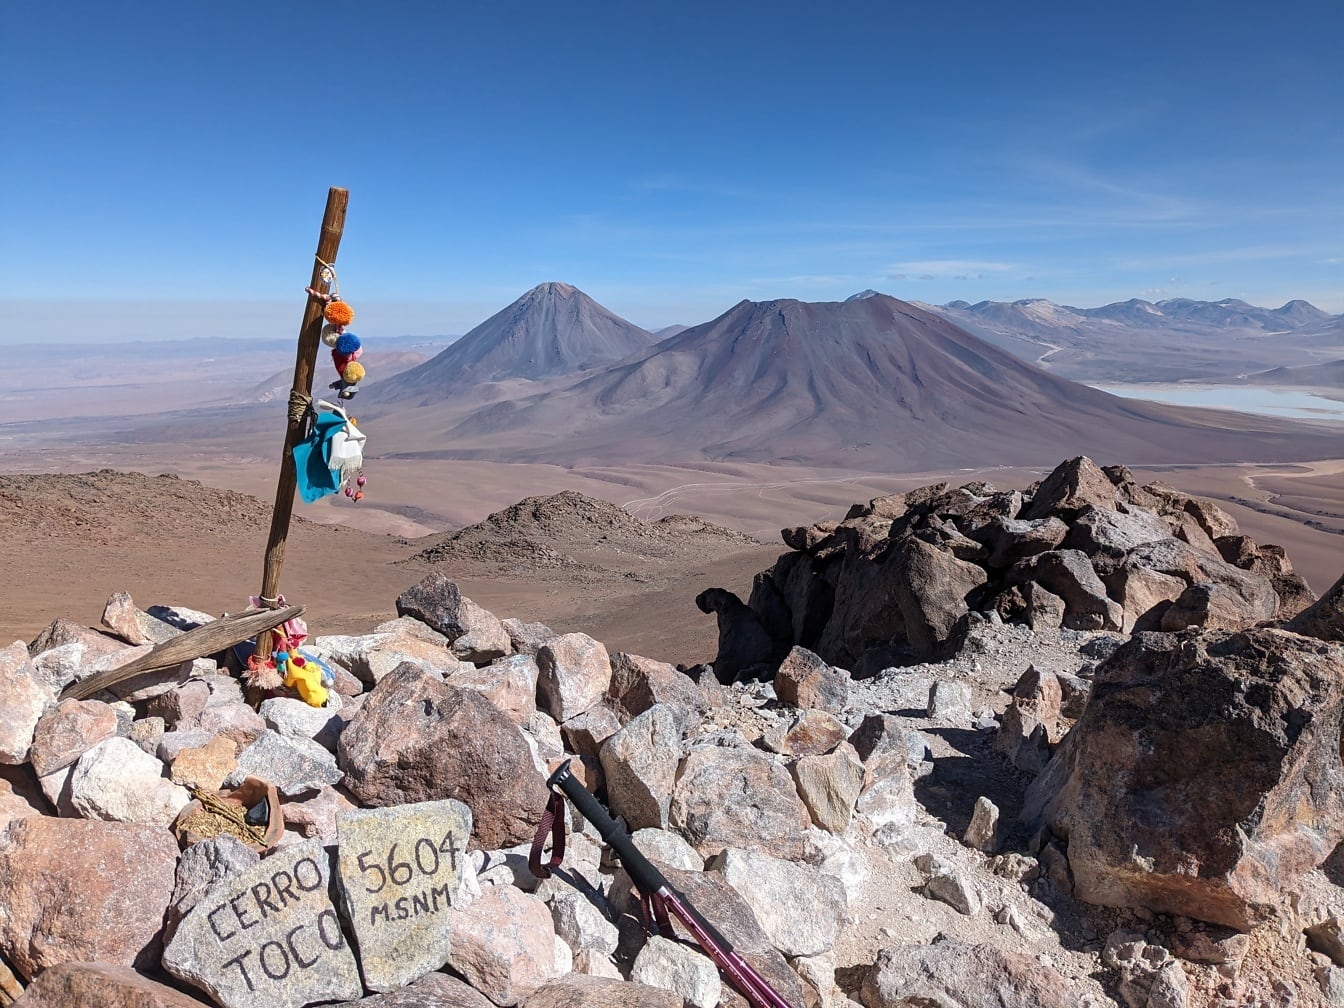 Berggipfel Cerro Toco in Chile auf 5604 Metern über Meer